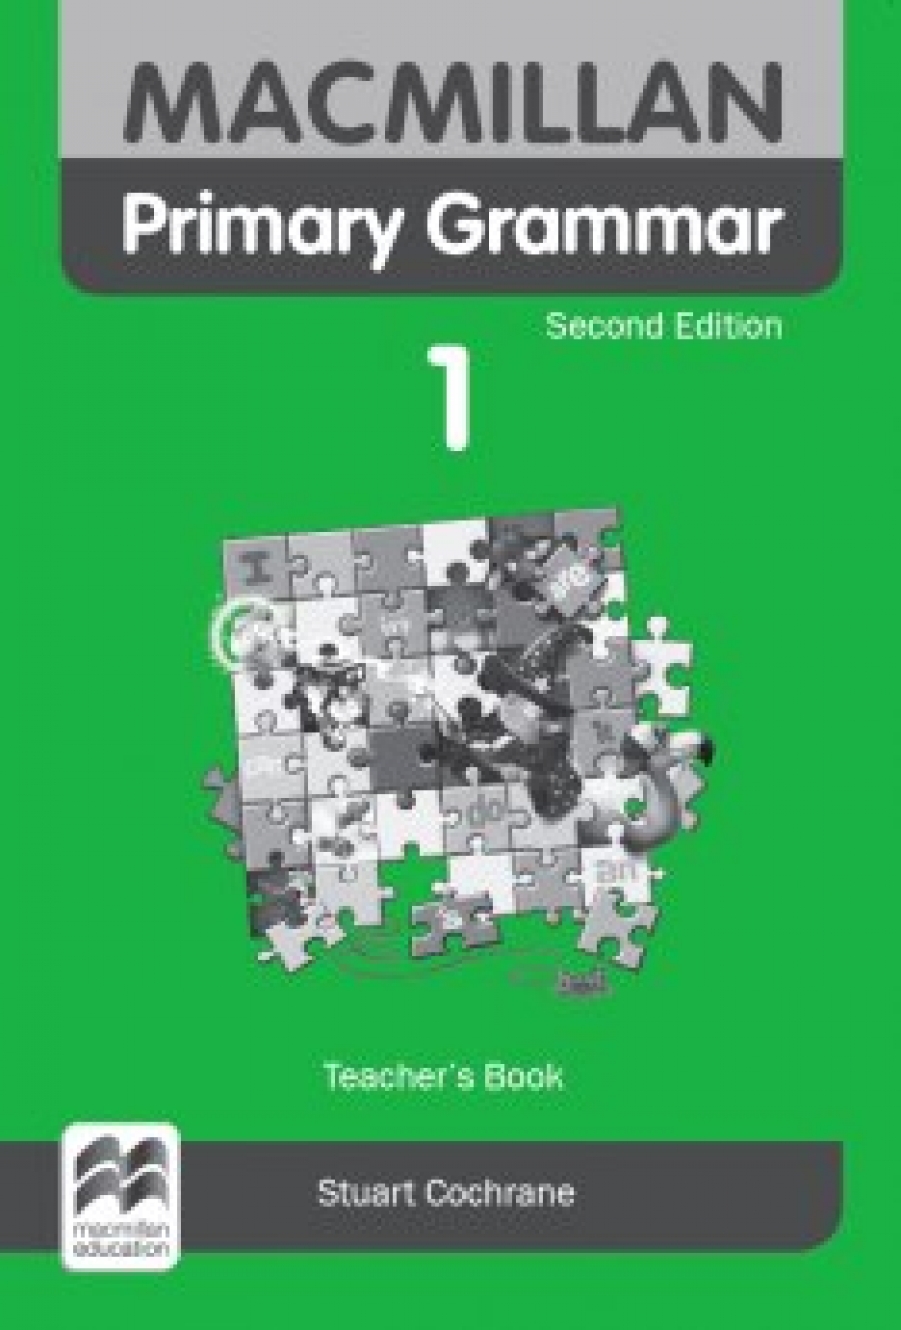 Cochrane S. Macmillan Primary Grammar 1. Teacher's book 